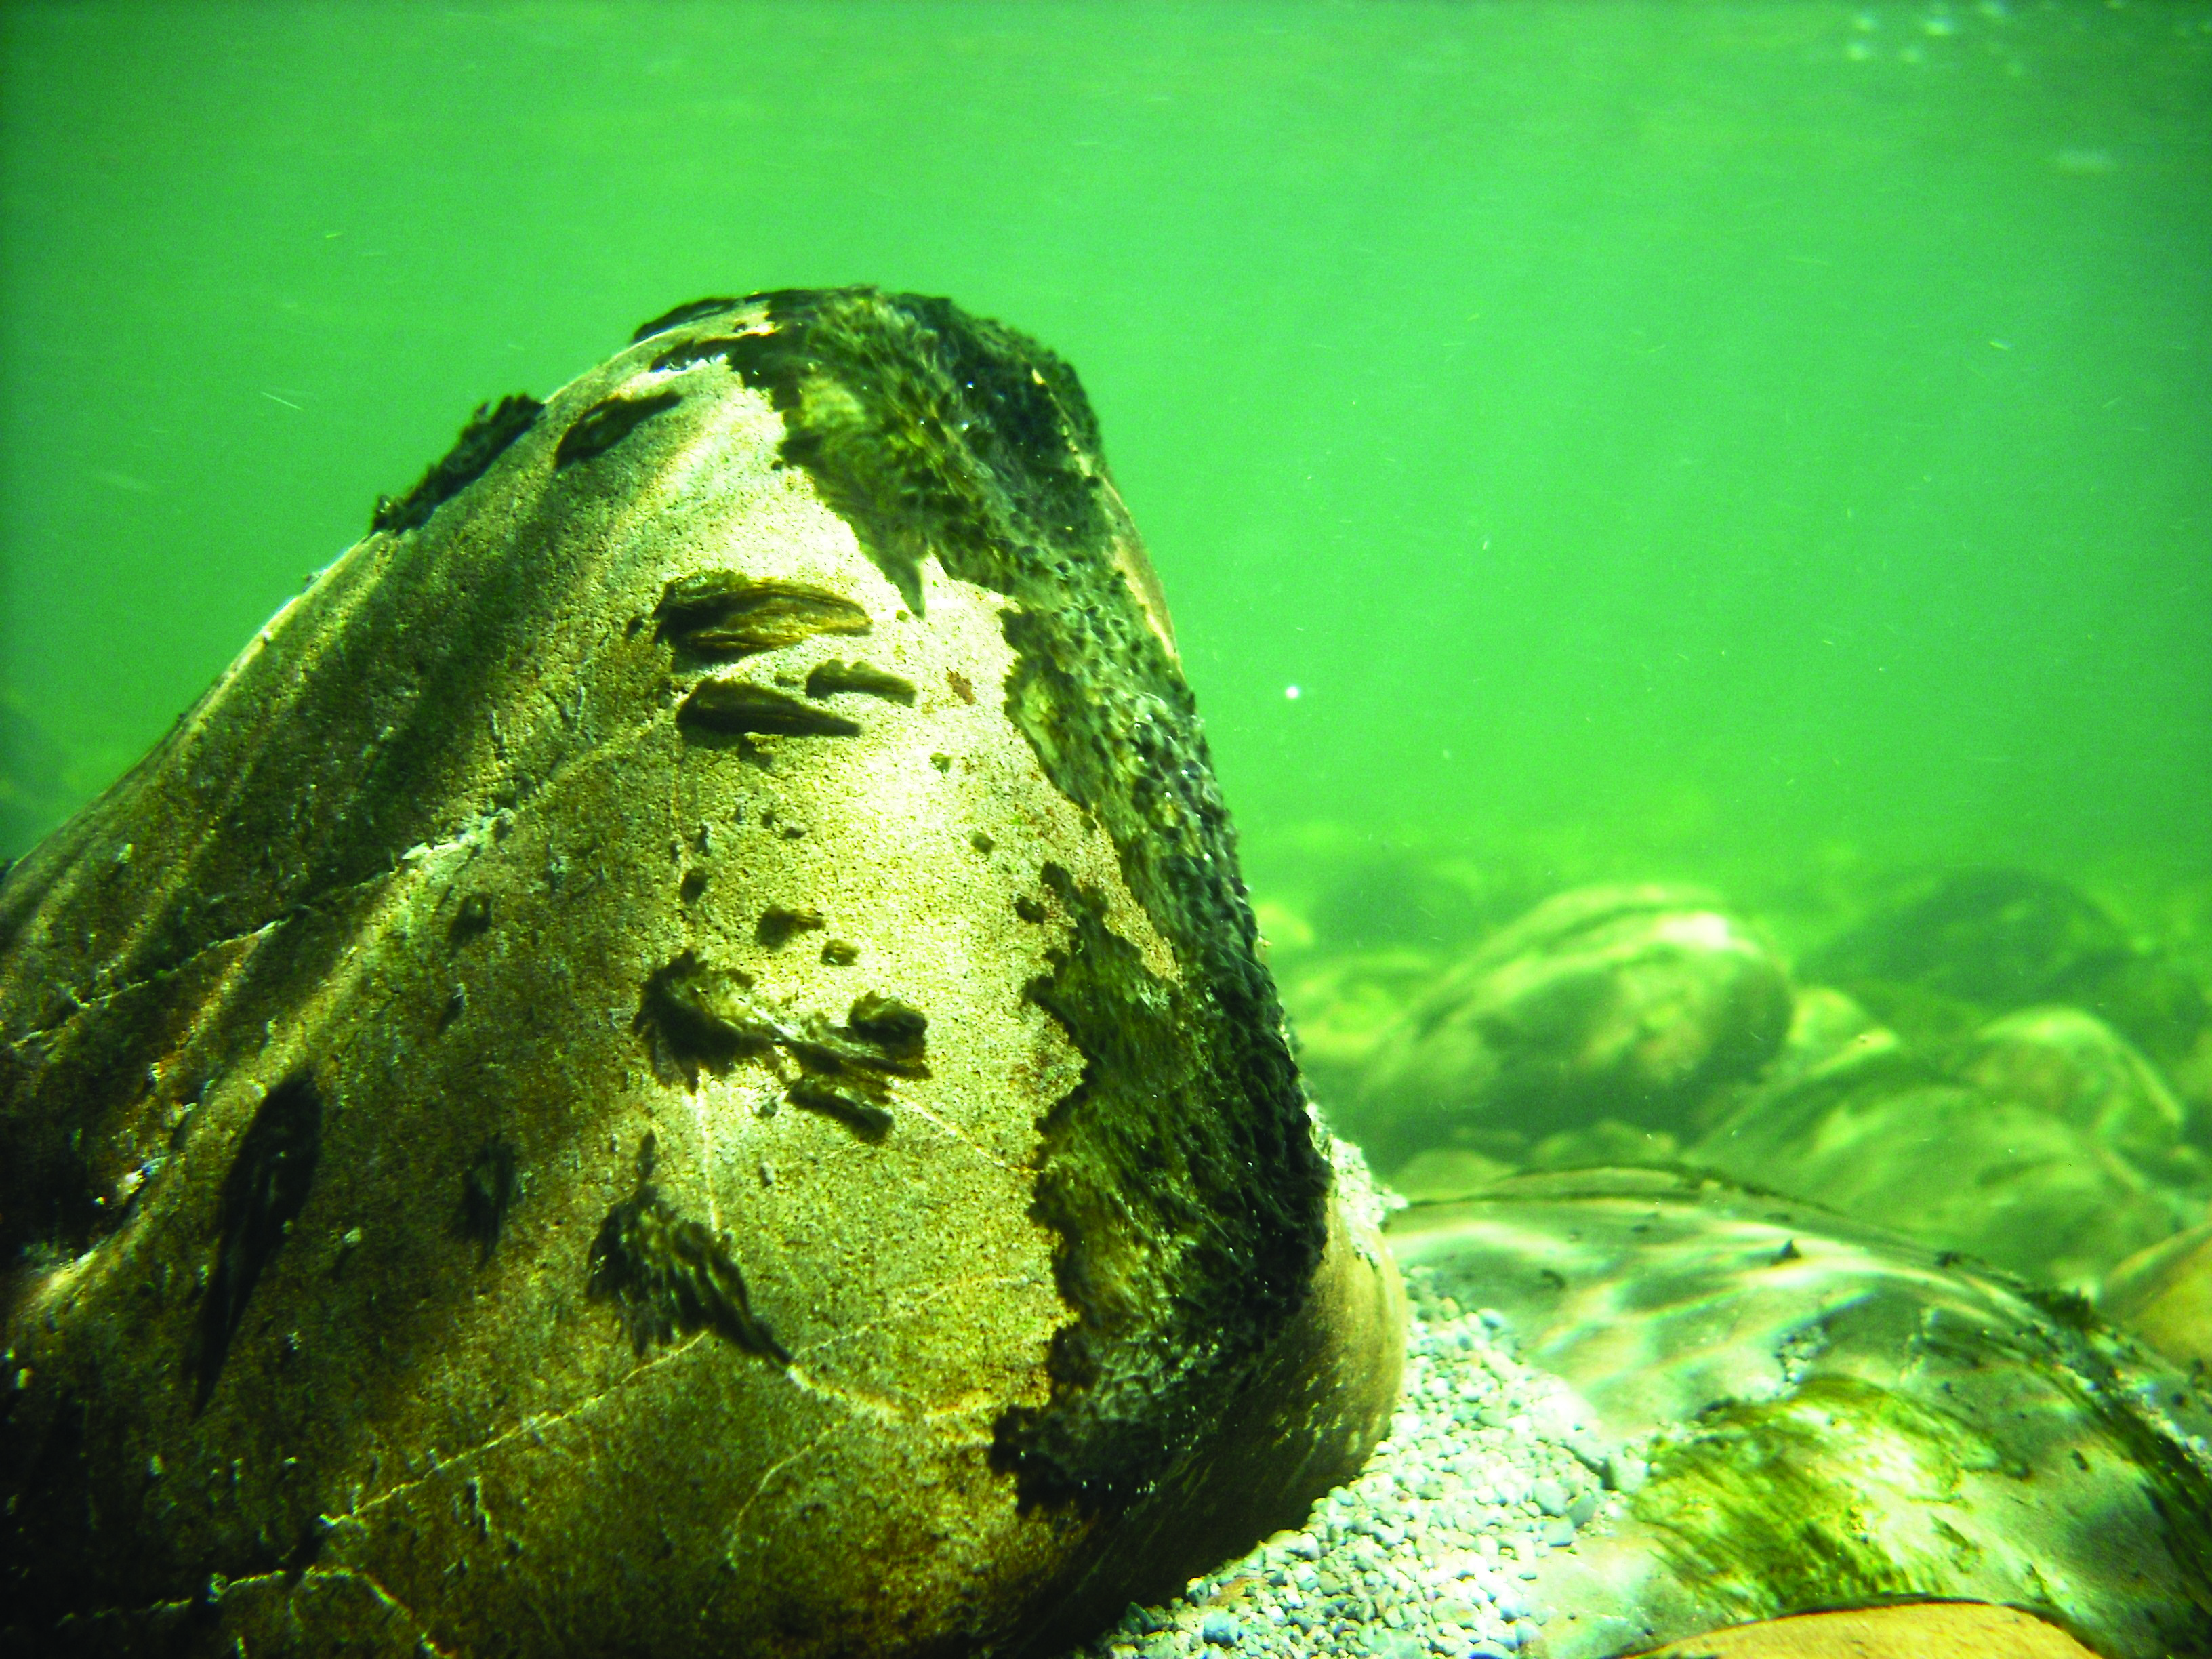 Toxic algae on an underwater rock